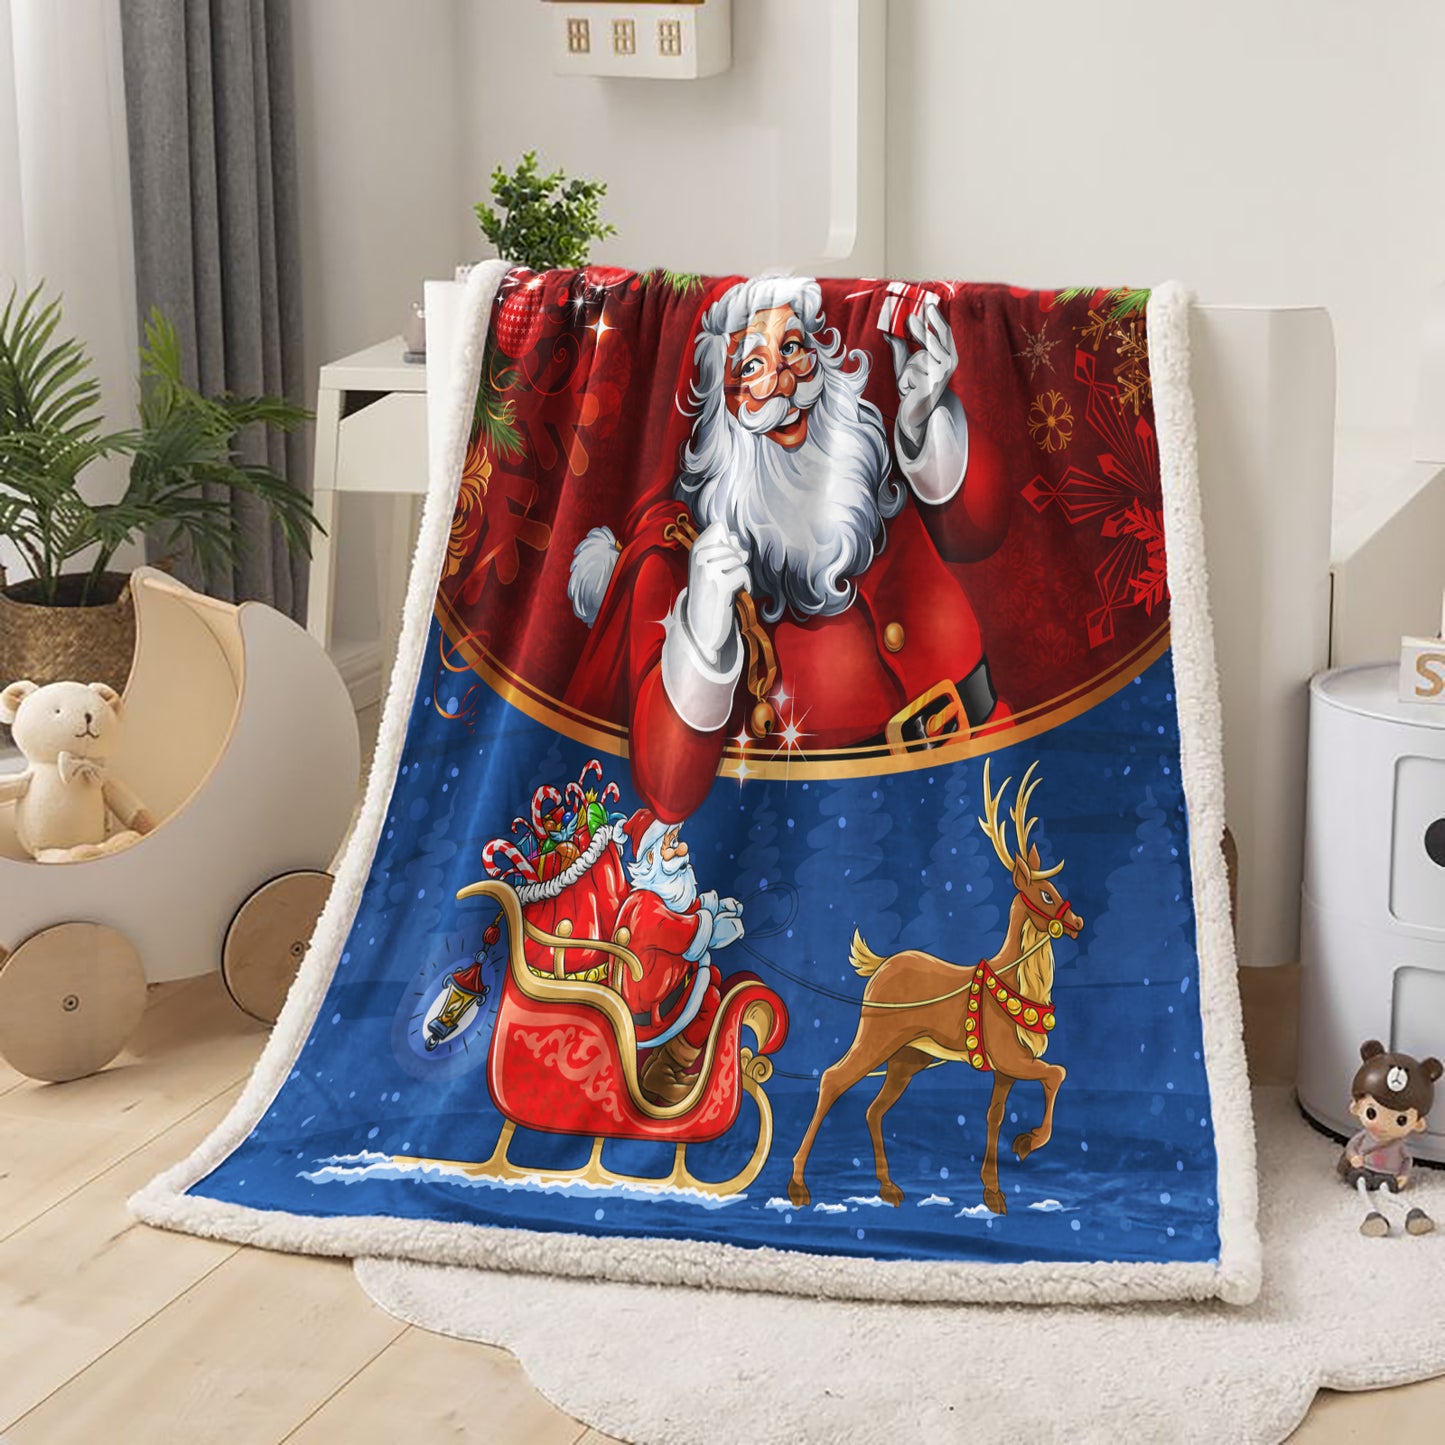 WONGS BEDDING Christmas Gift of Santa Blanket